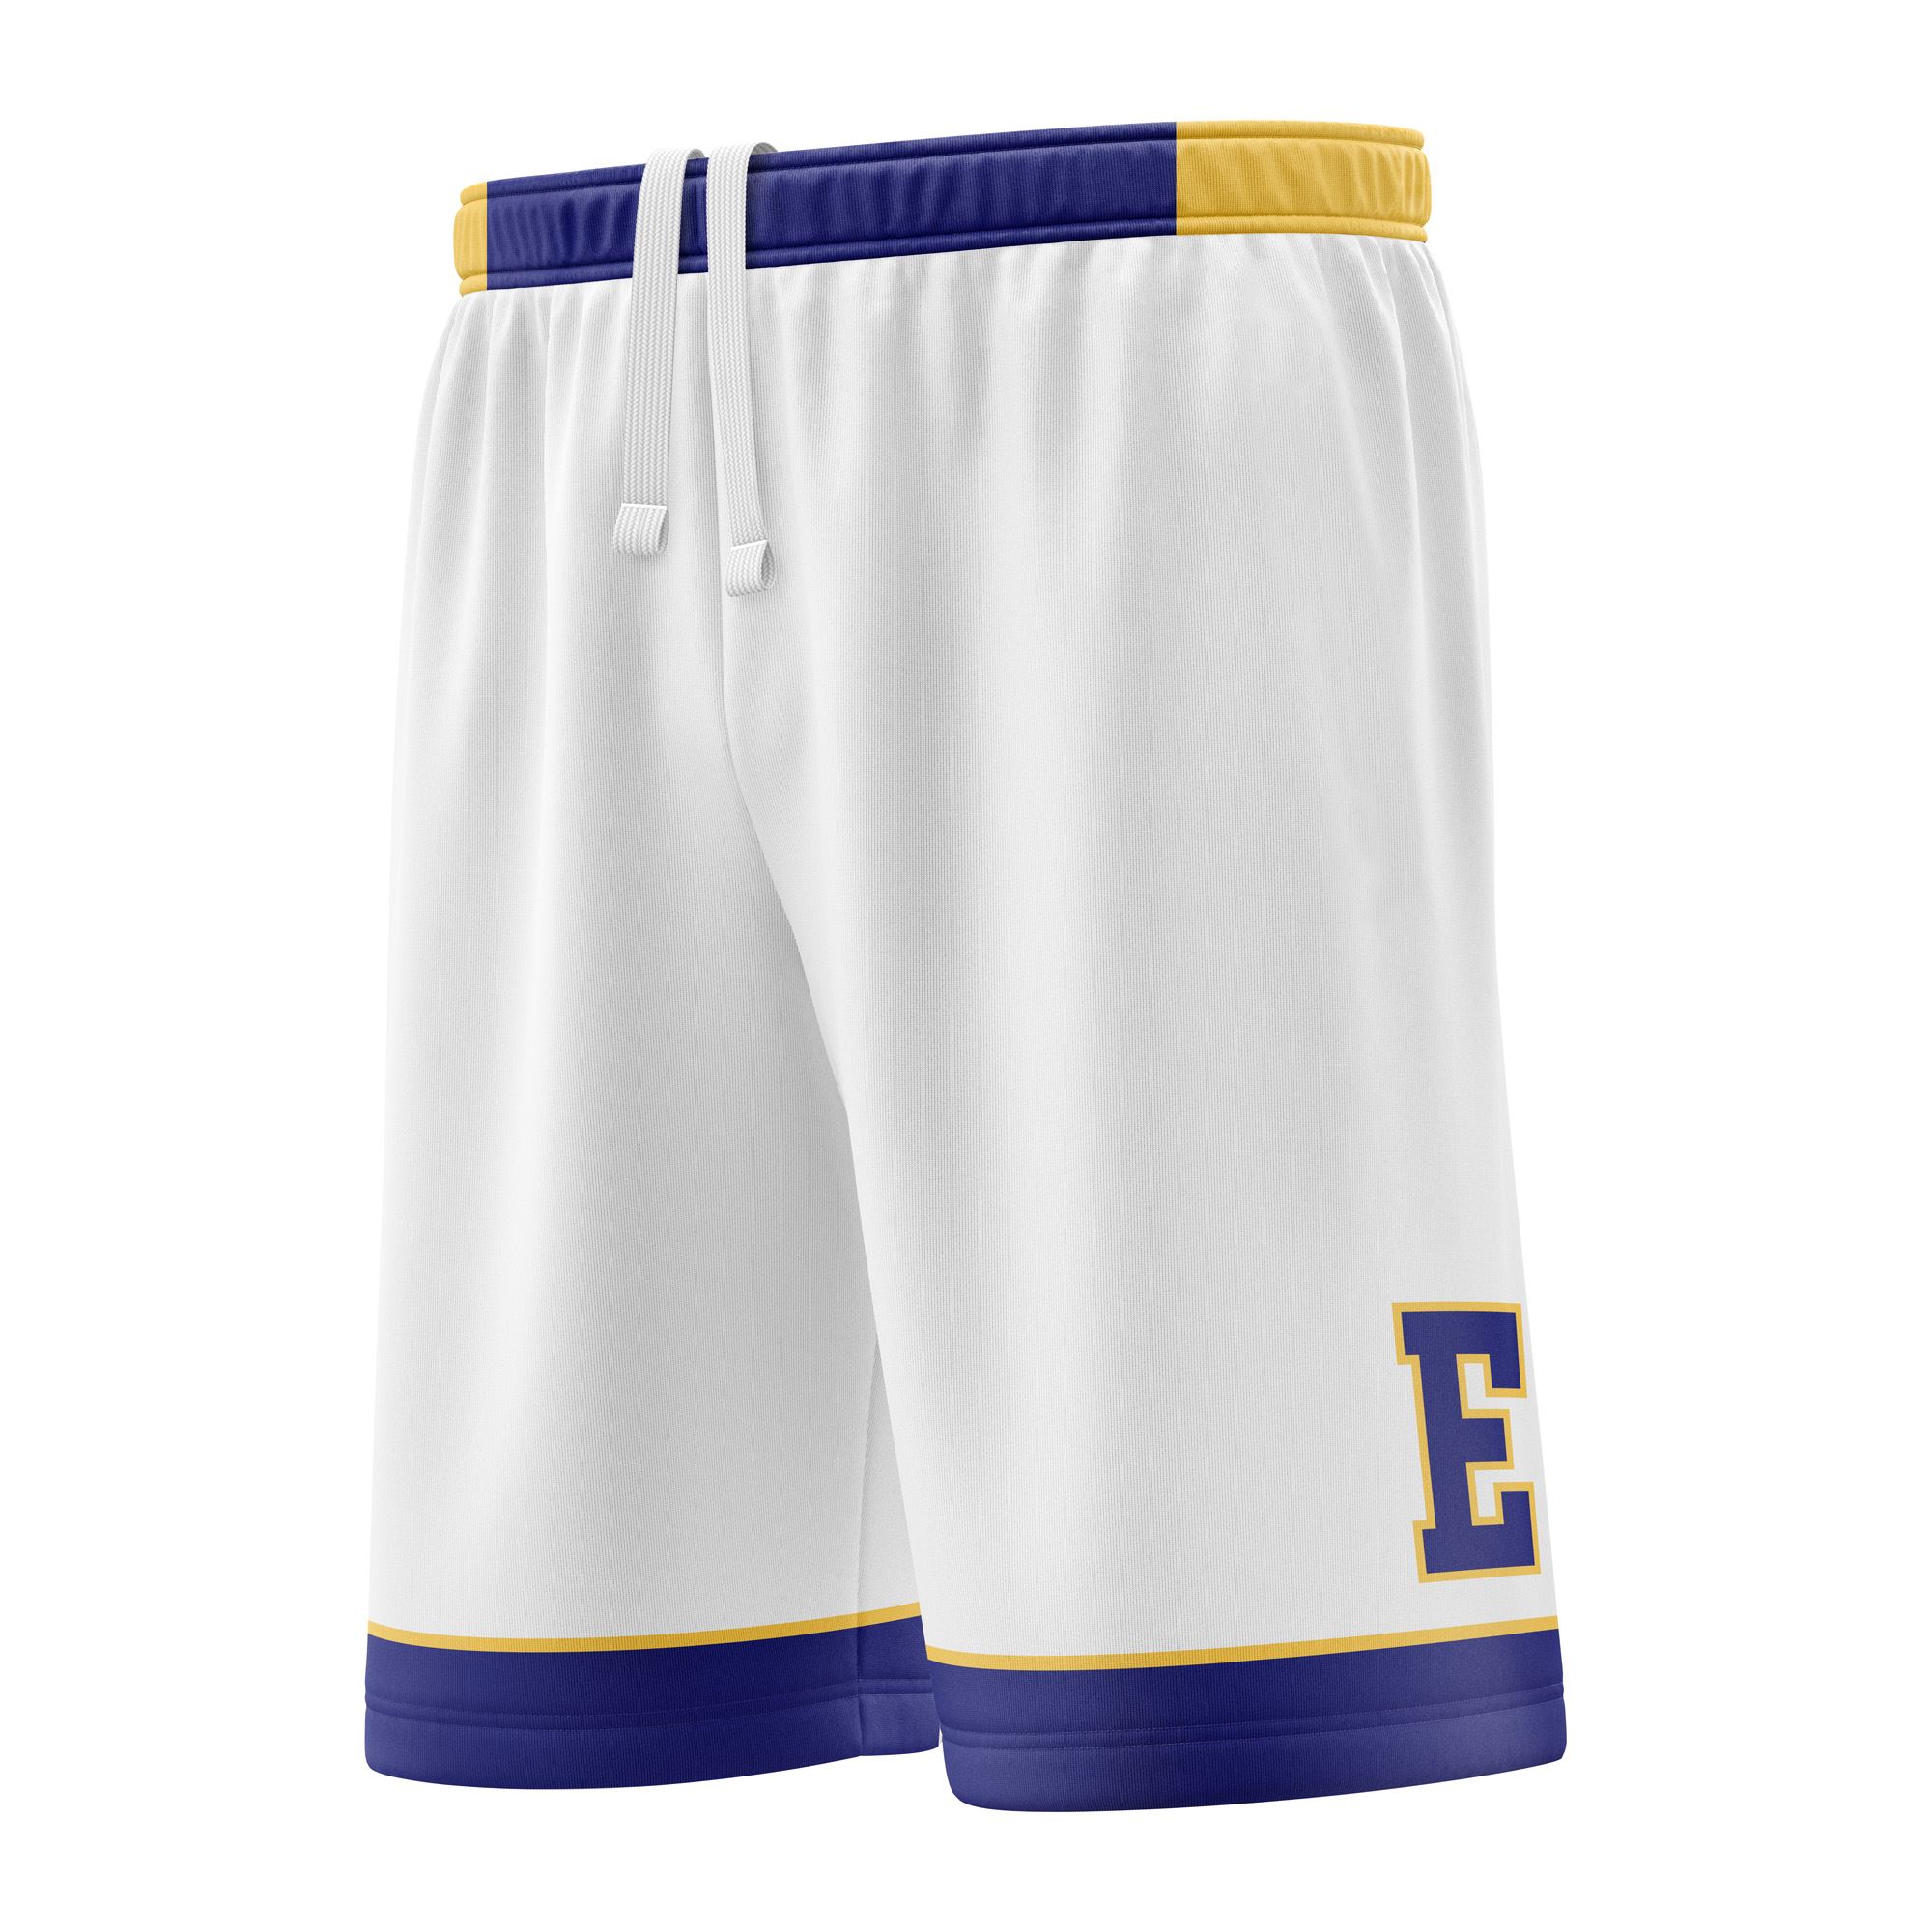 Full Dye Sub Basketball Shorts - left view